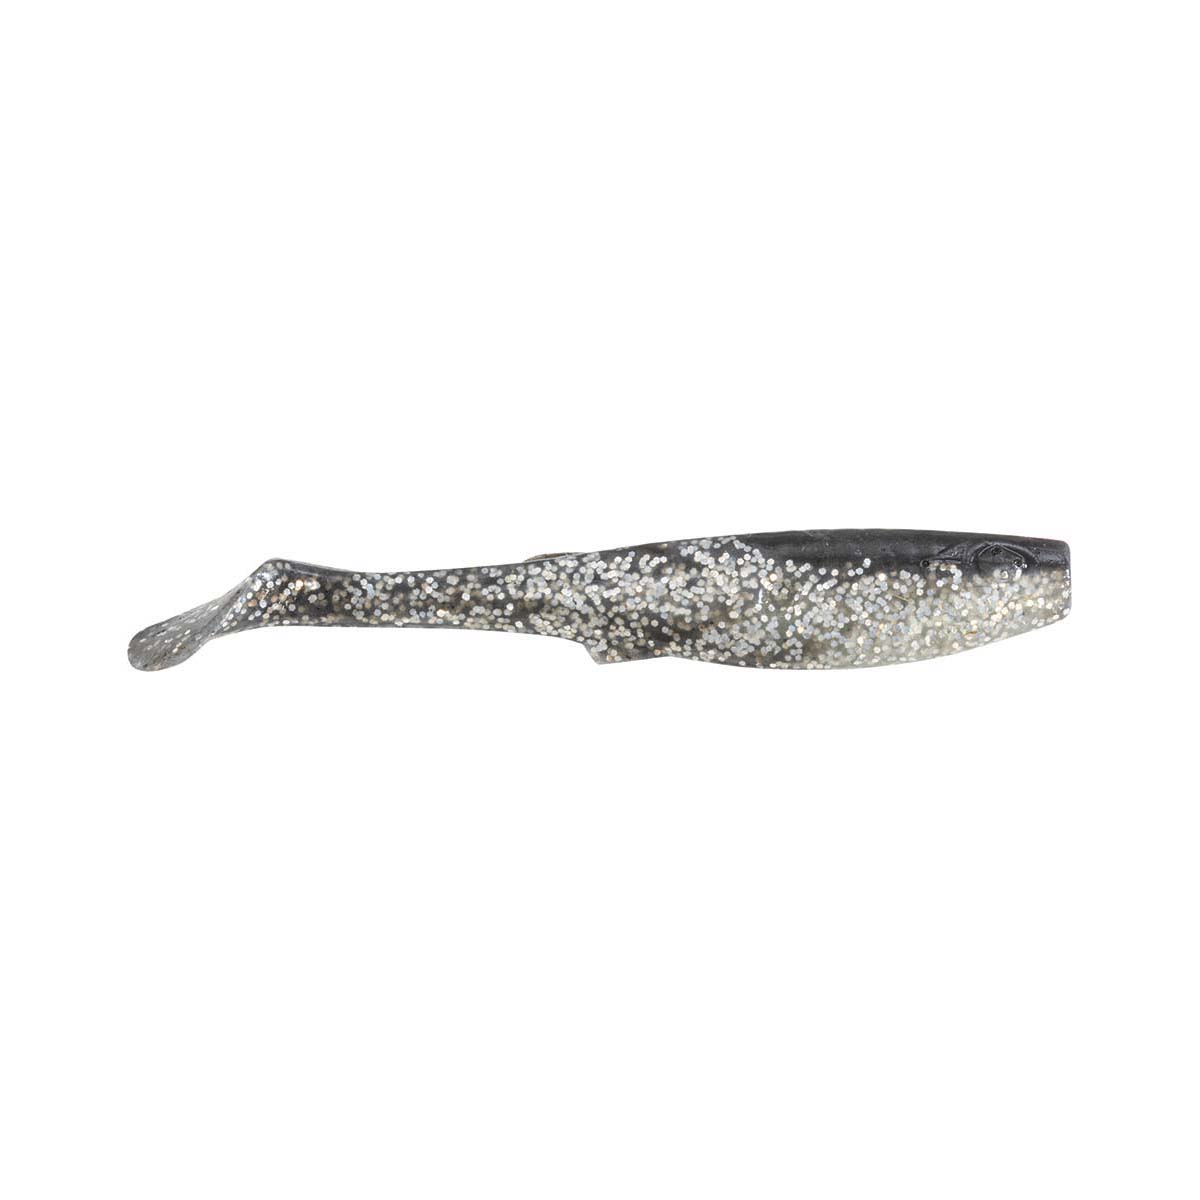 Berkley Gulp! Paddletail Shad Soft Plastic Lure 6in Black / Silver